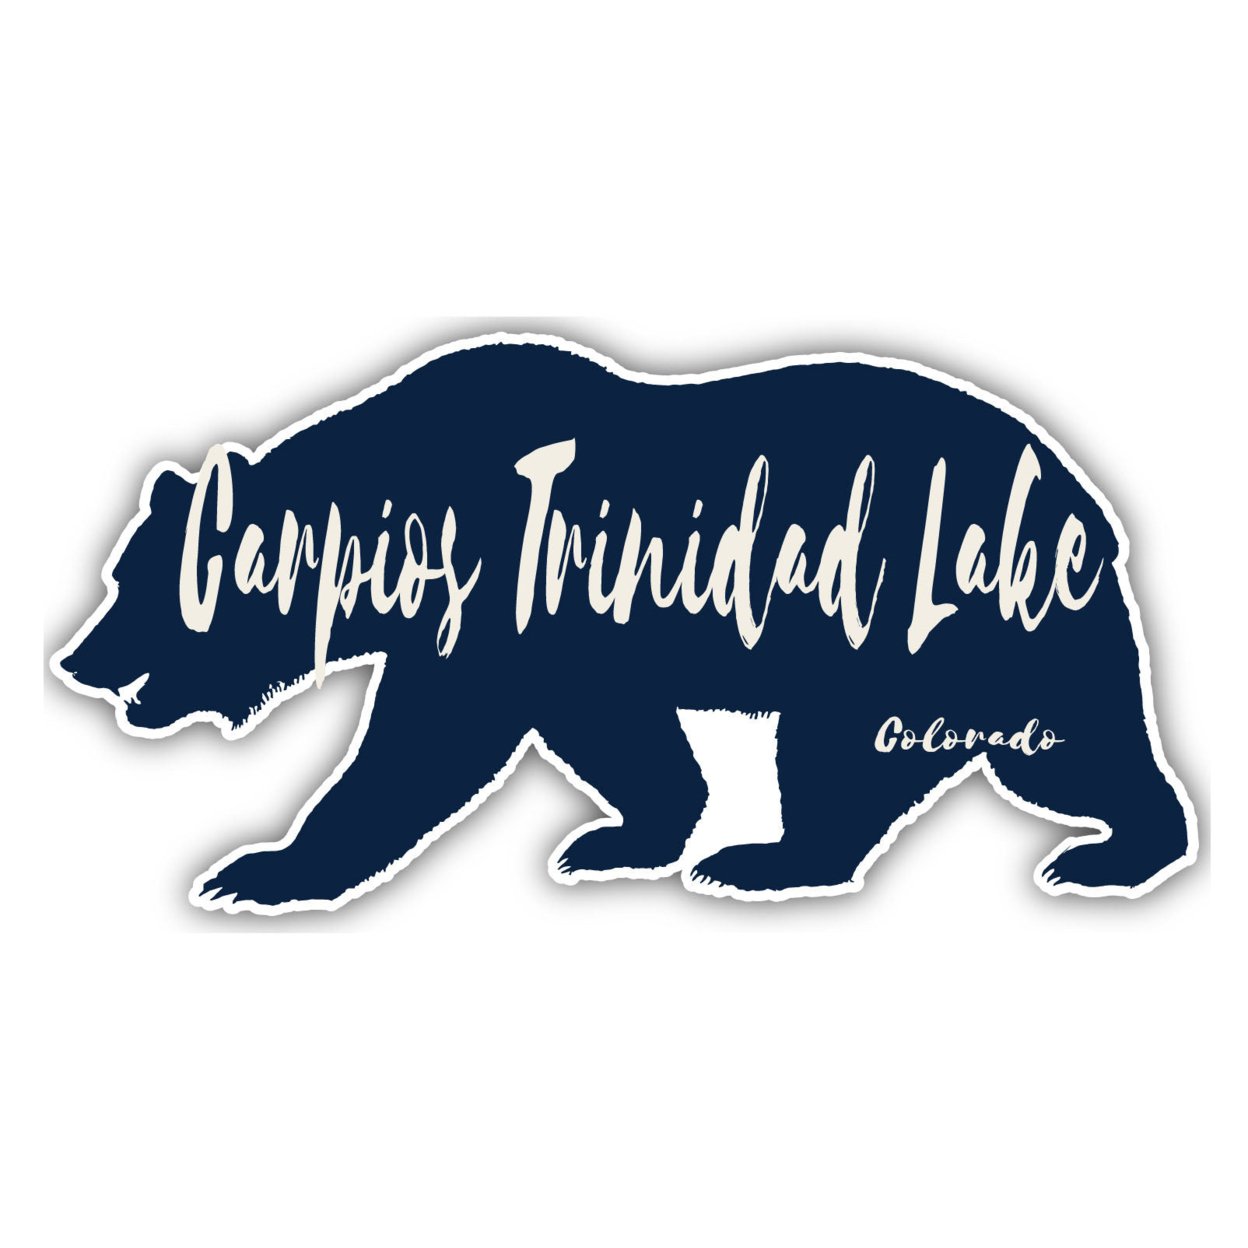 Carpios Trinidad Lake Colorado Souvenir Decorative Stickers (Choose Theme And Size) - 4-Pack, 6-Inch, Bear